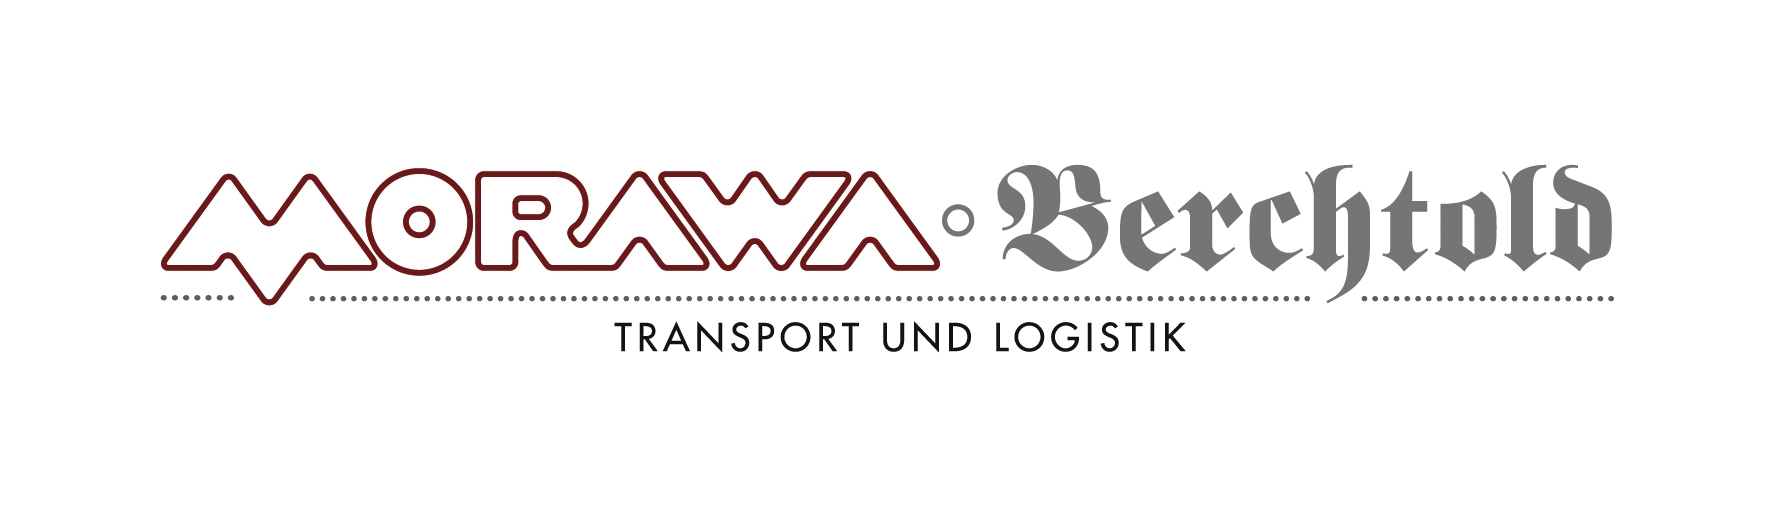 Morawa Berchtold Transporte GmbH